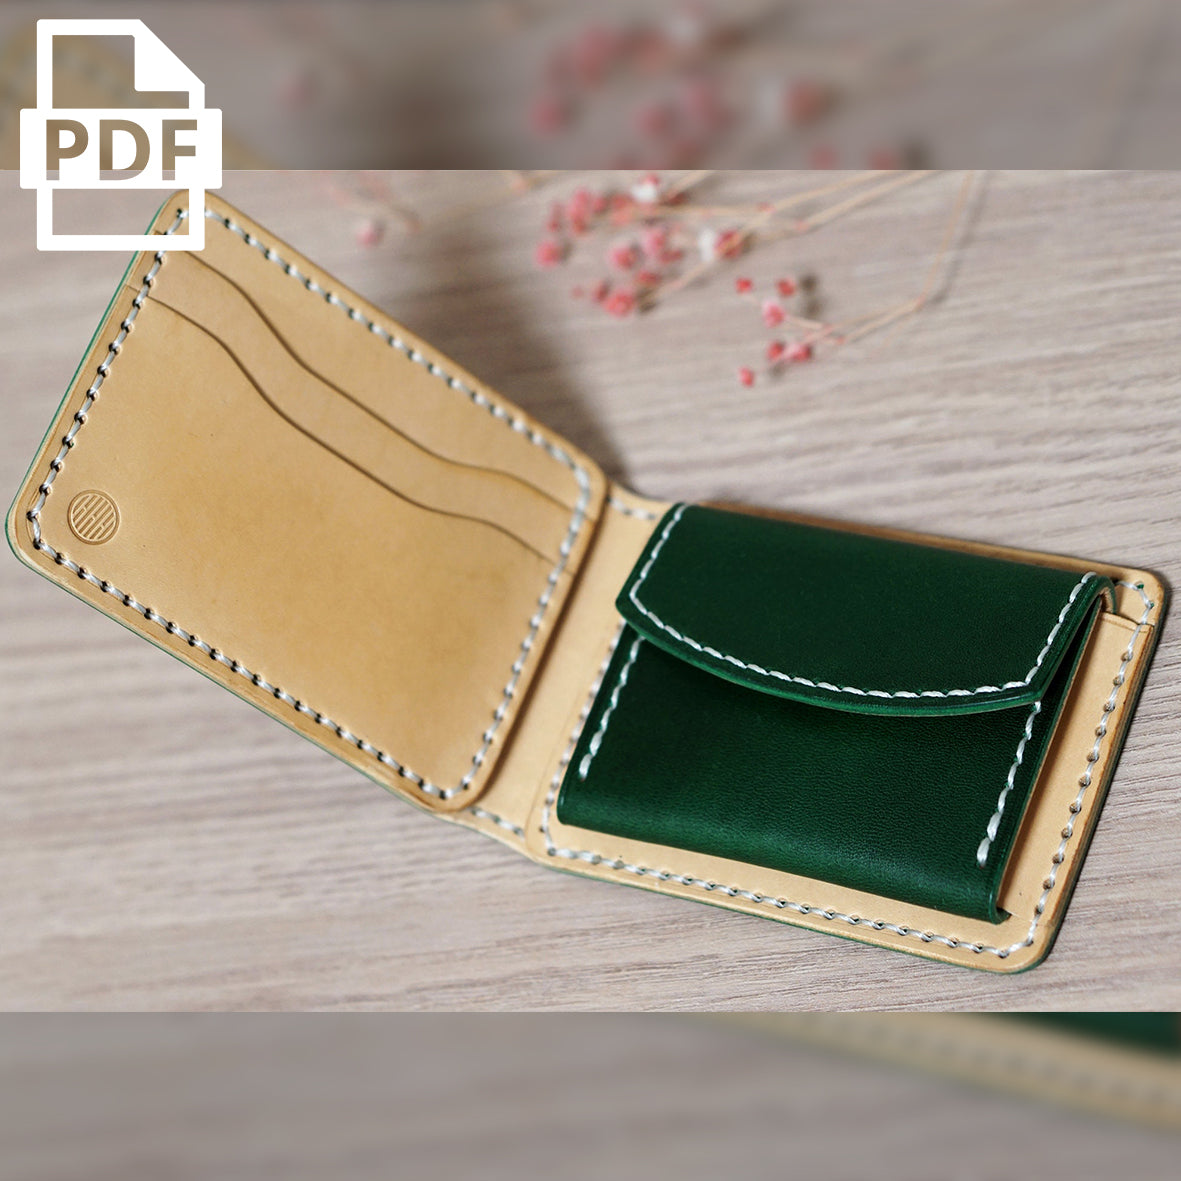 PDF Long Wallet Template Phone Wallet -   Long wallet pattern, Wallet  pattern, Leather wallet pattern